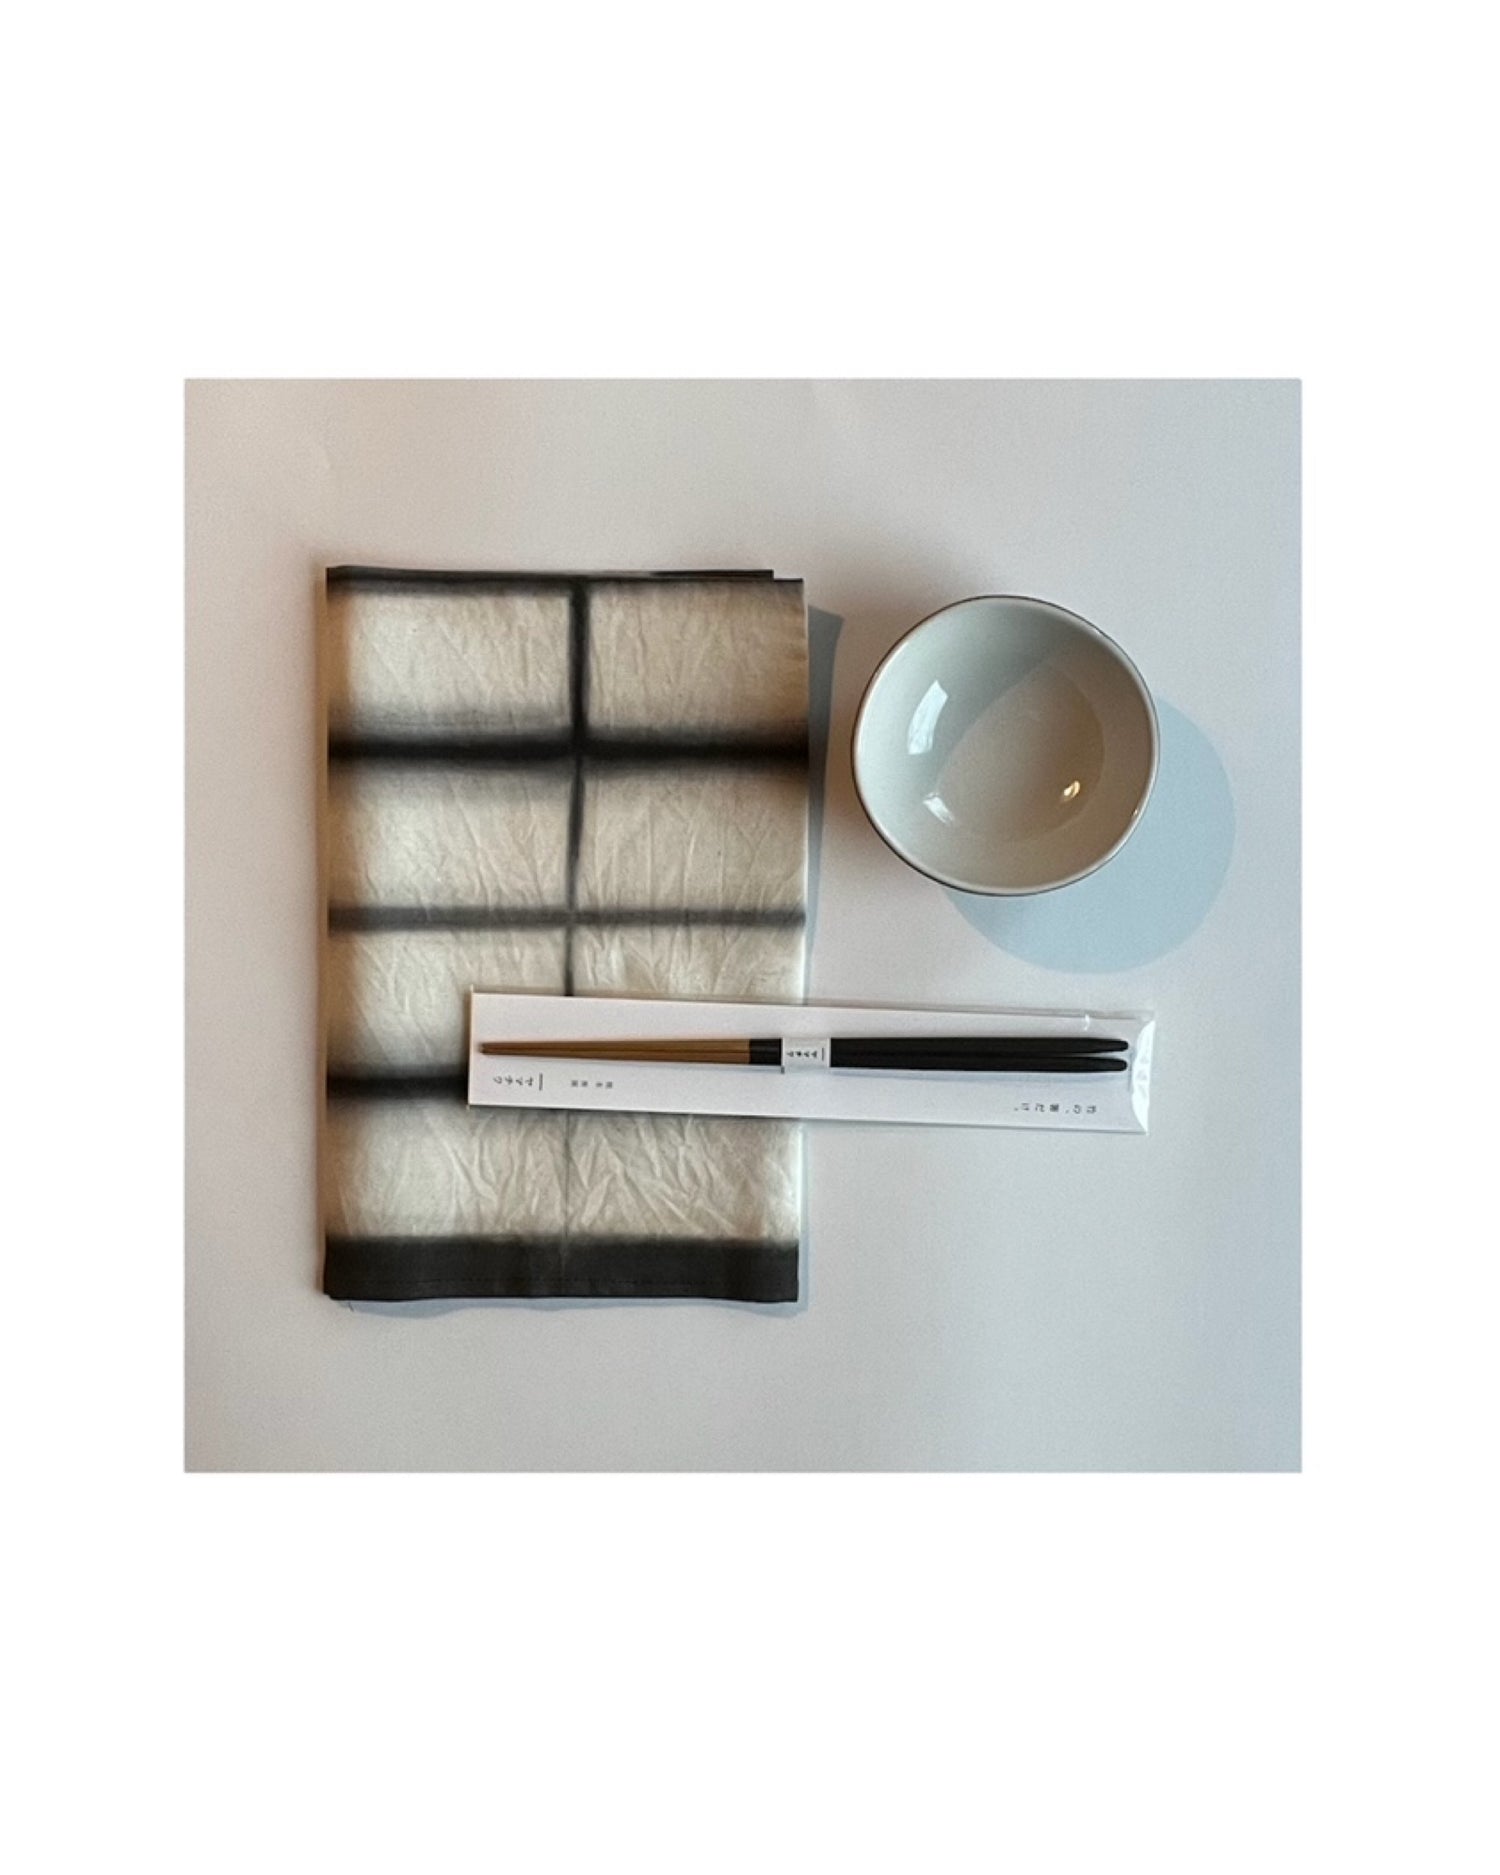 Shibori Cotton Napkin with chopsticks and bowl